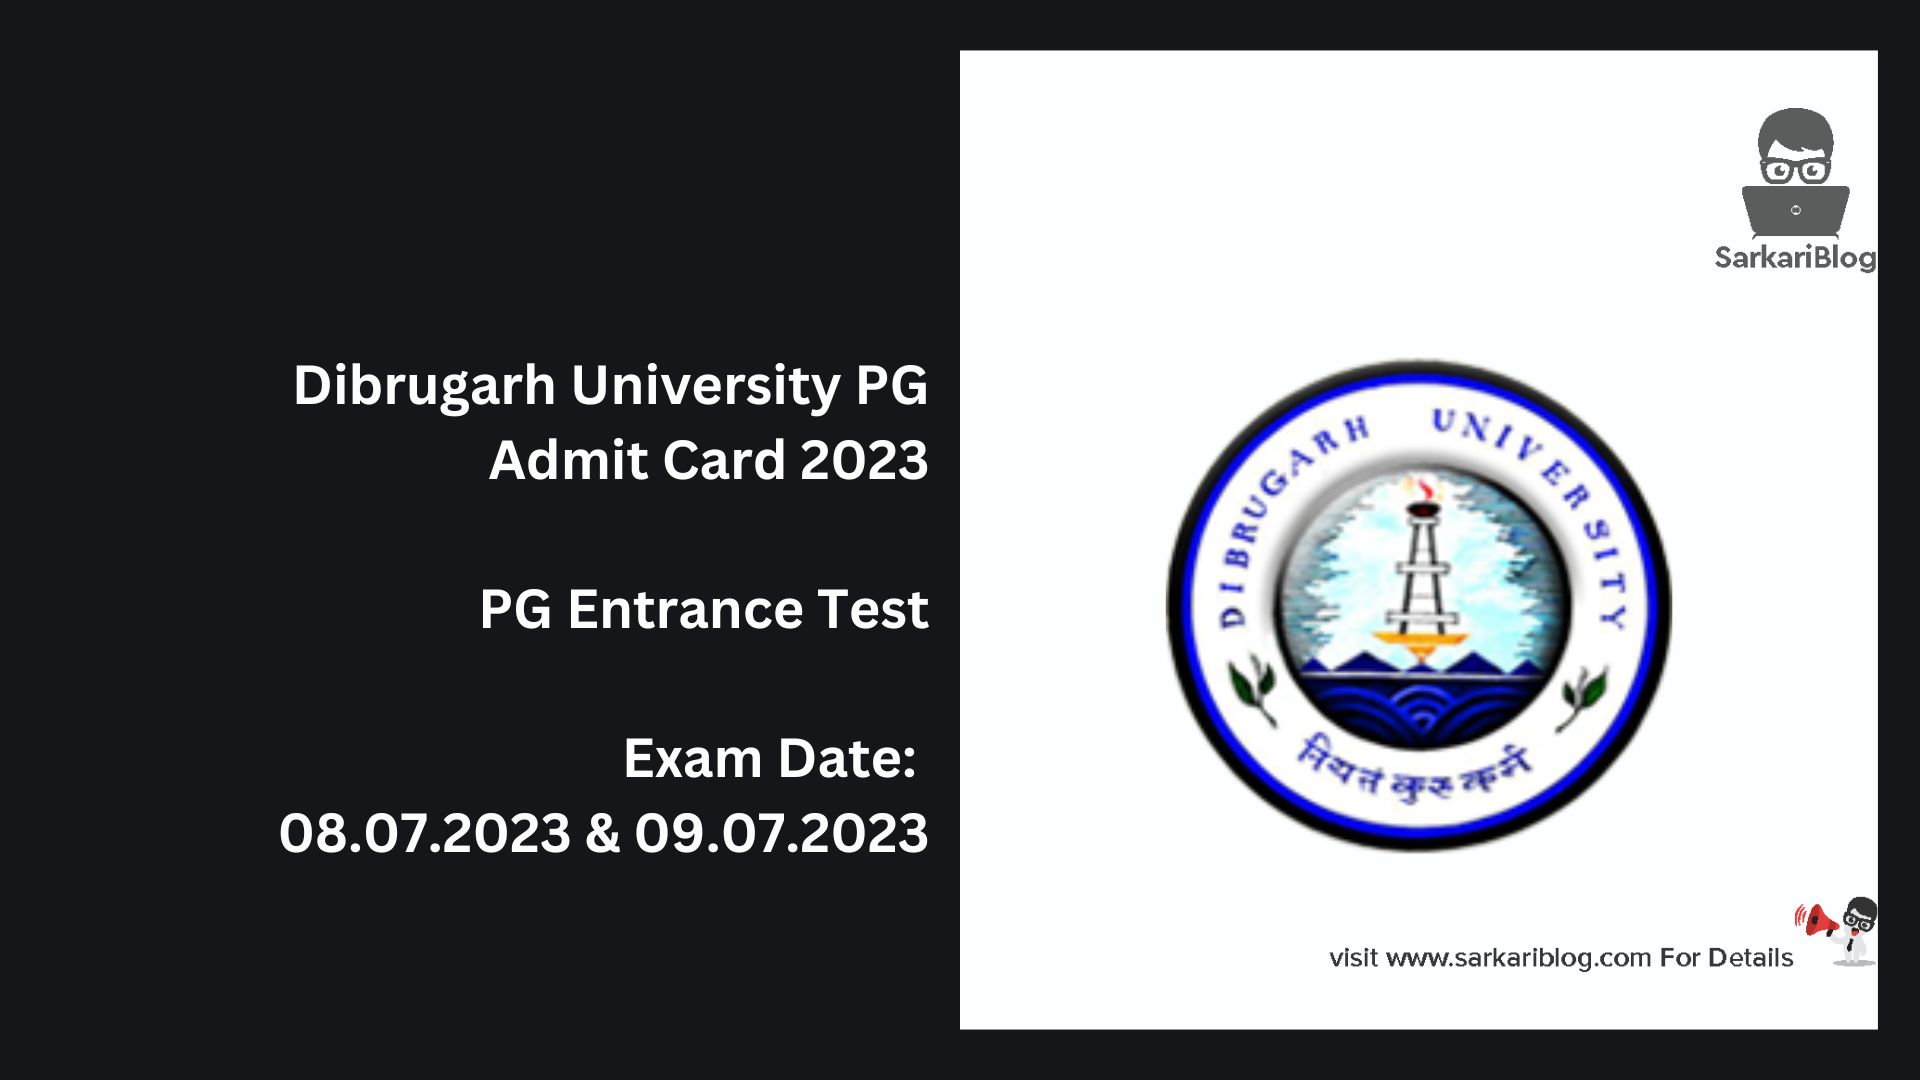 Dibrugarh University PG Admit Card 2023